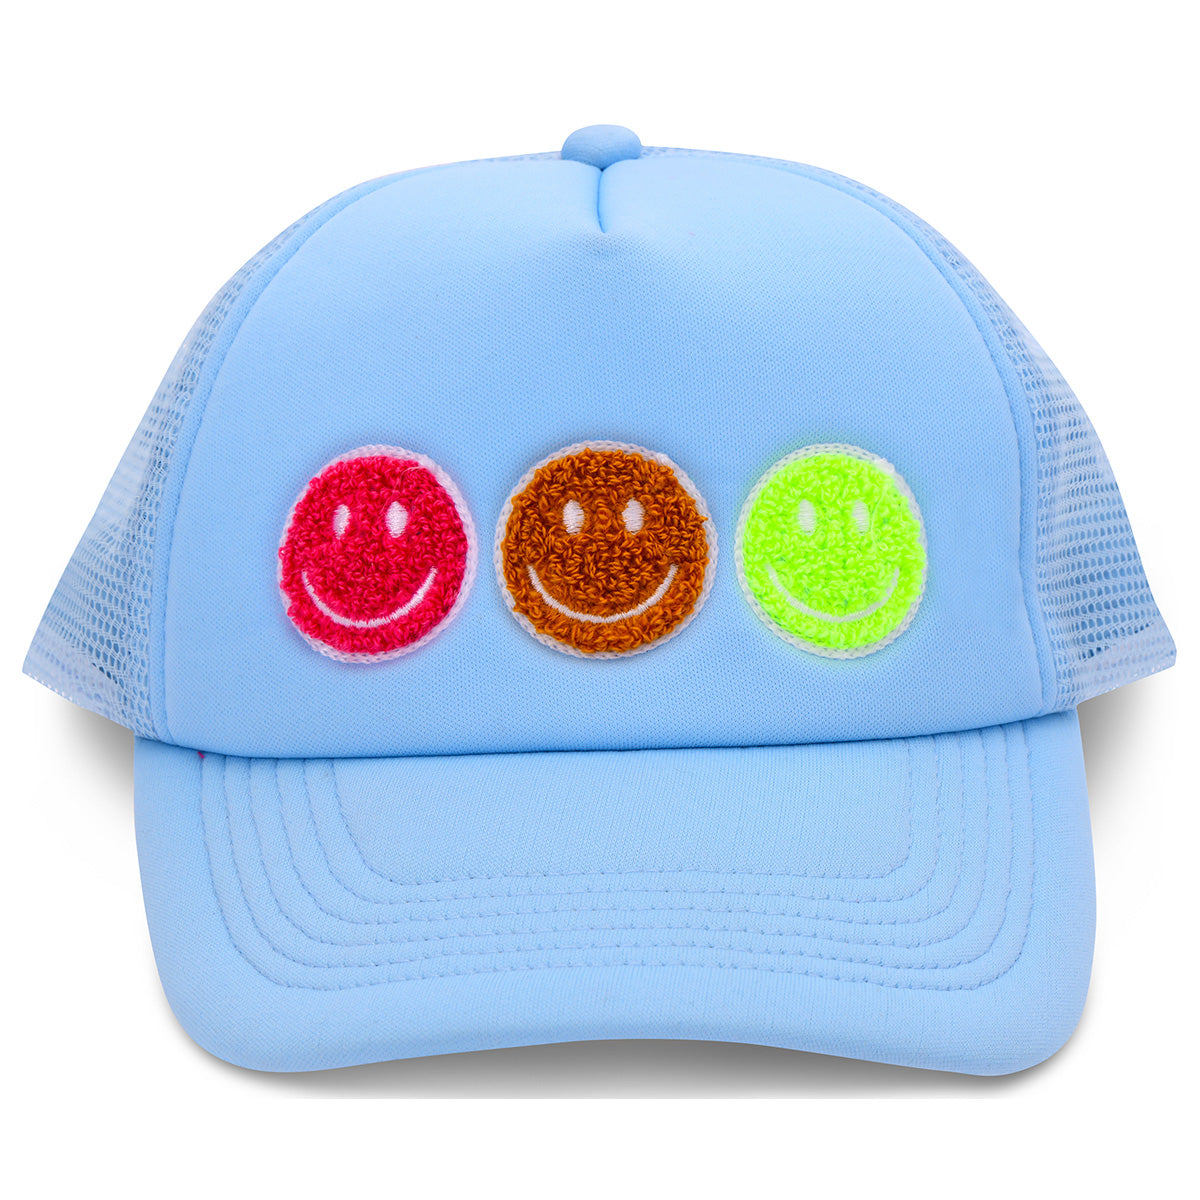 You Make Me Smile Trucker Hat